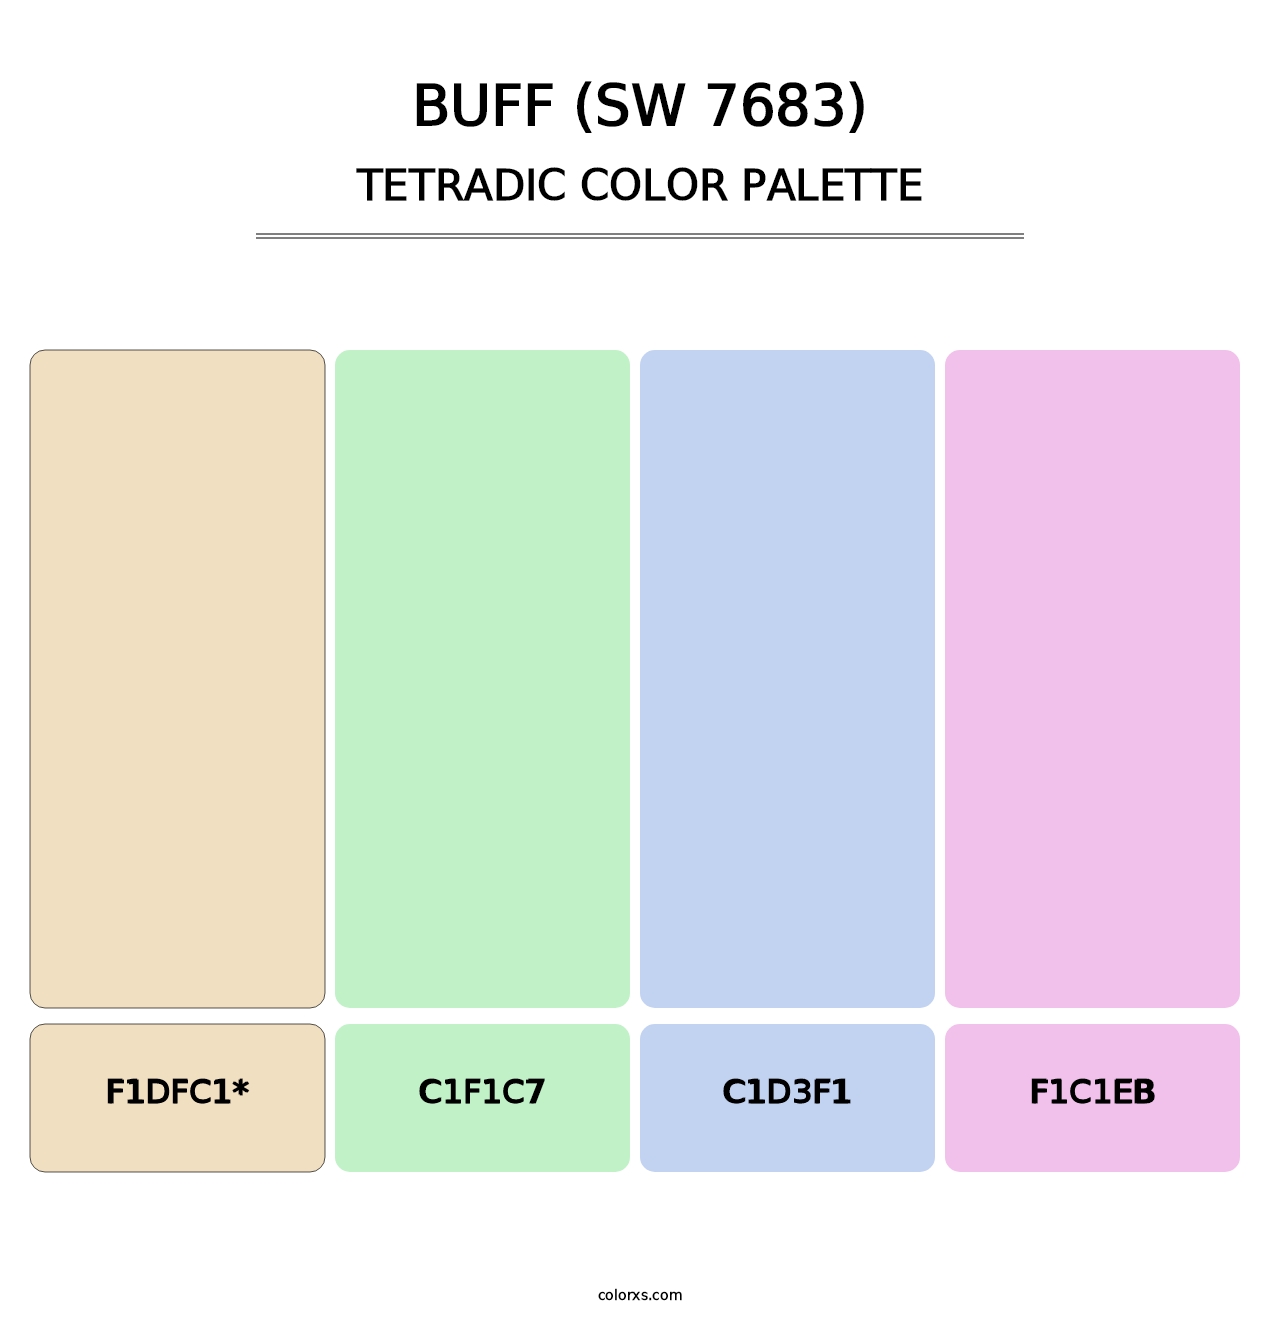 Buff (SW 7683) - Tetradic Color Palette